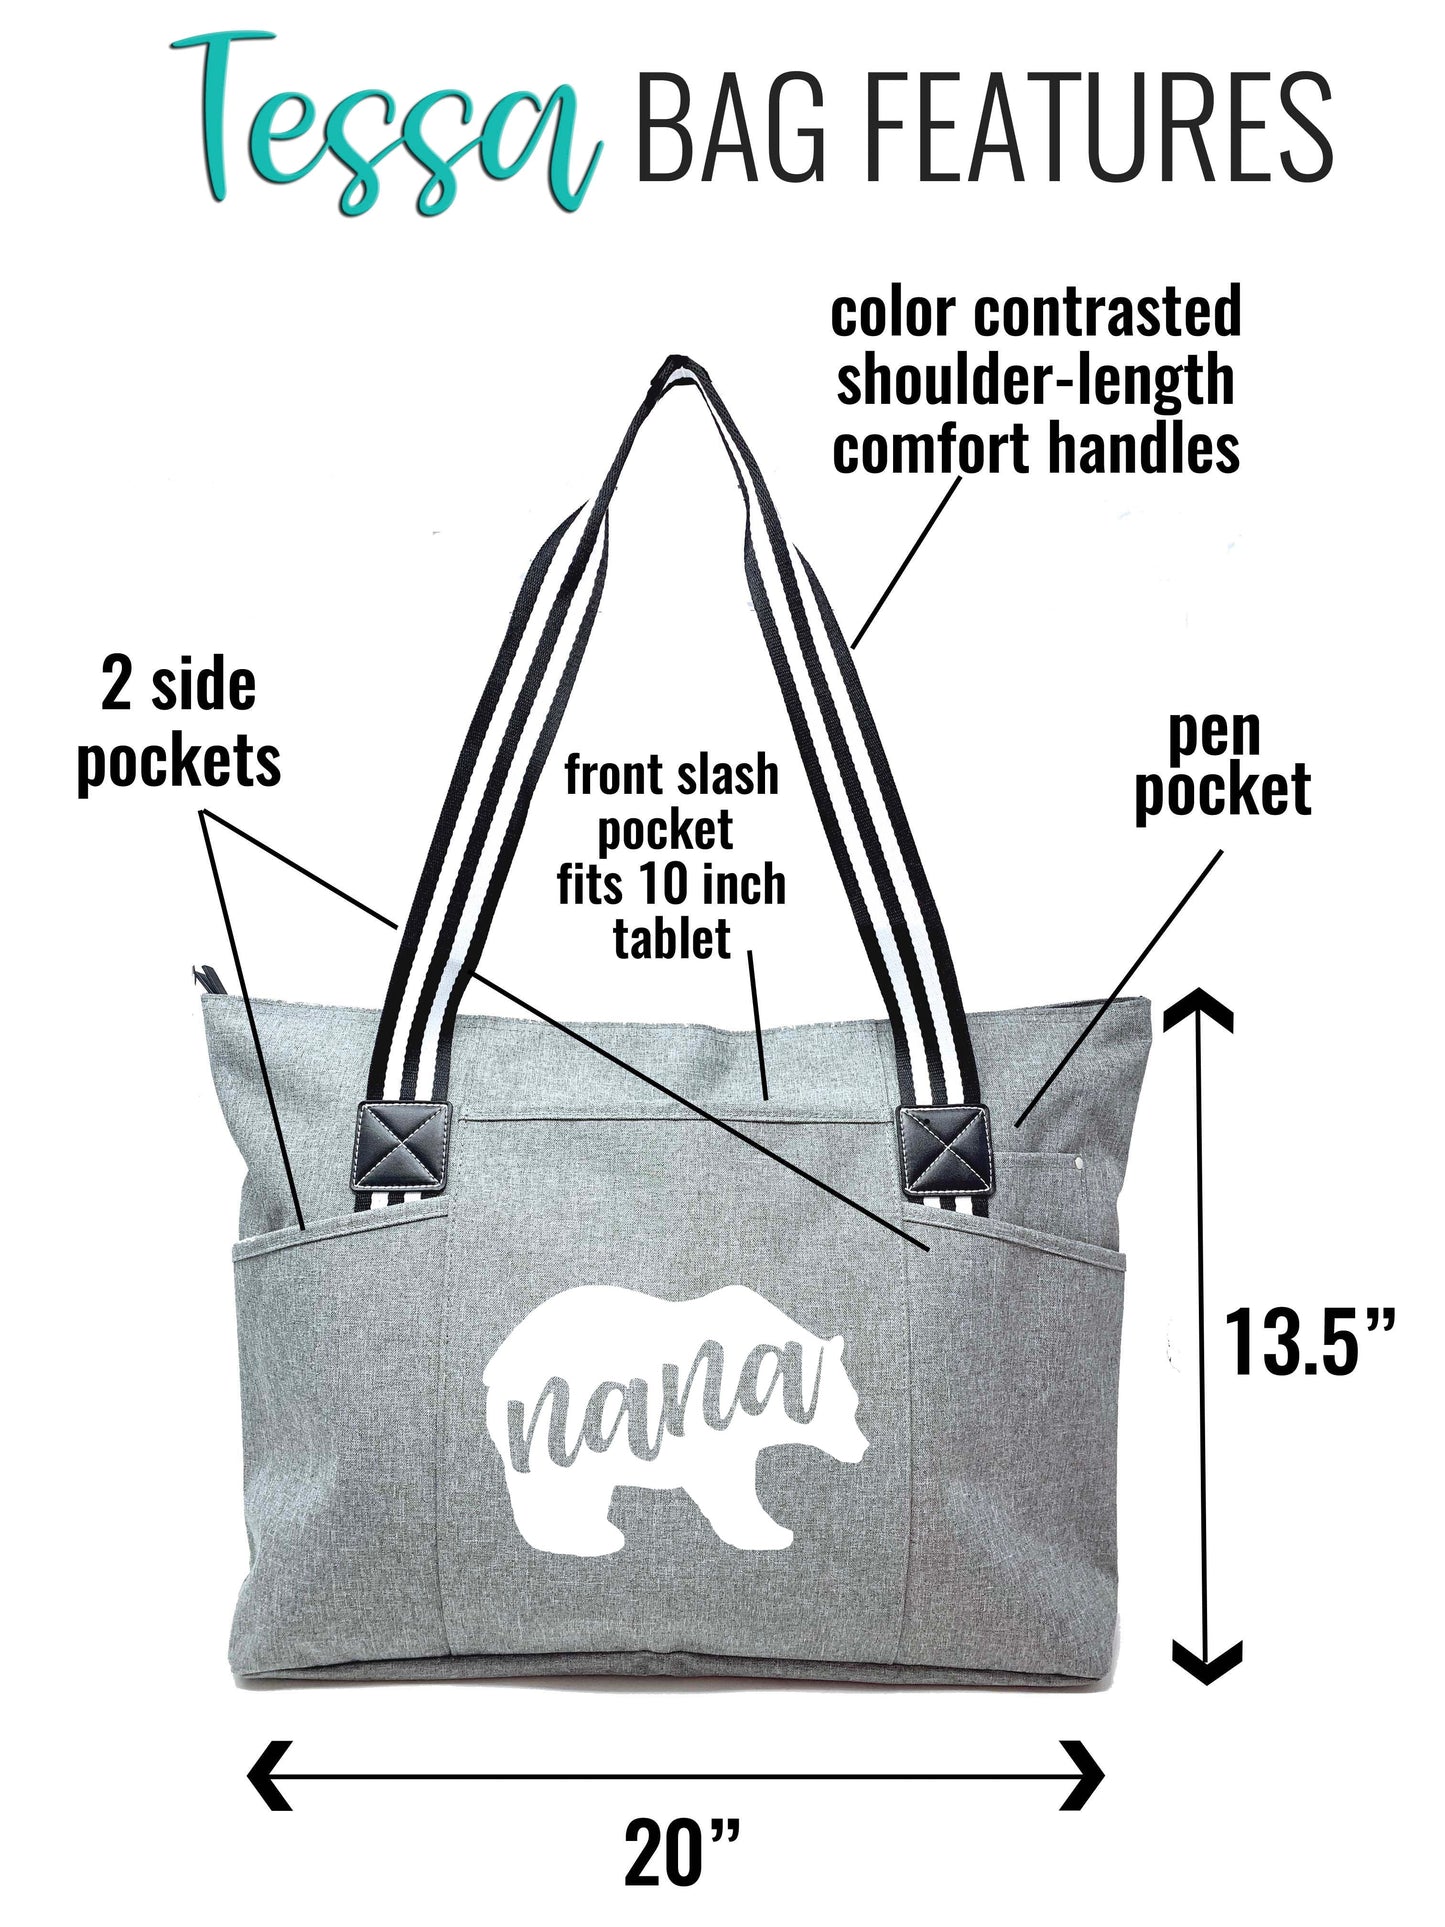 Nana Bear Tessa Gray Tote Bag for Grandmothers - Outlet Deal Utah